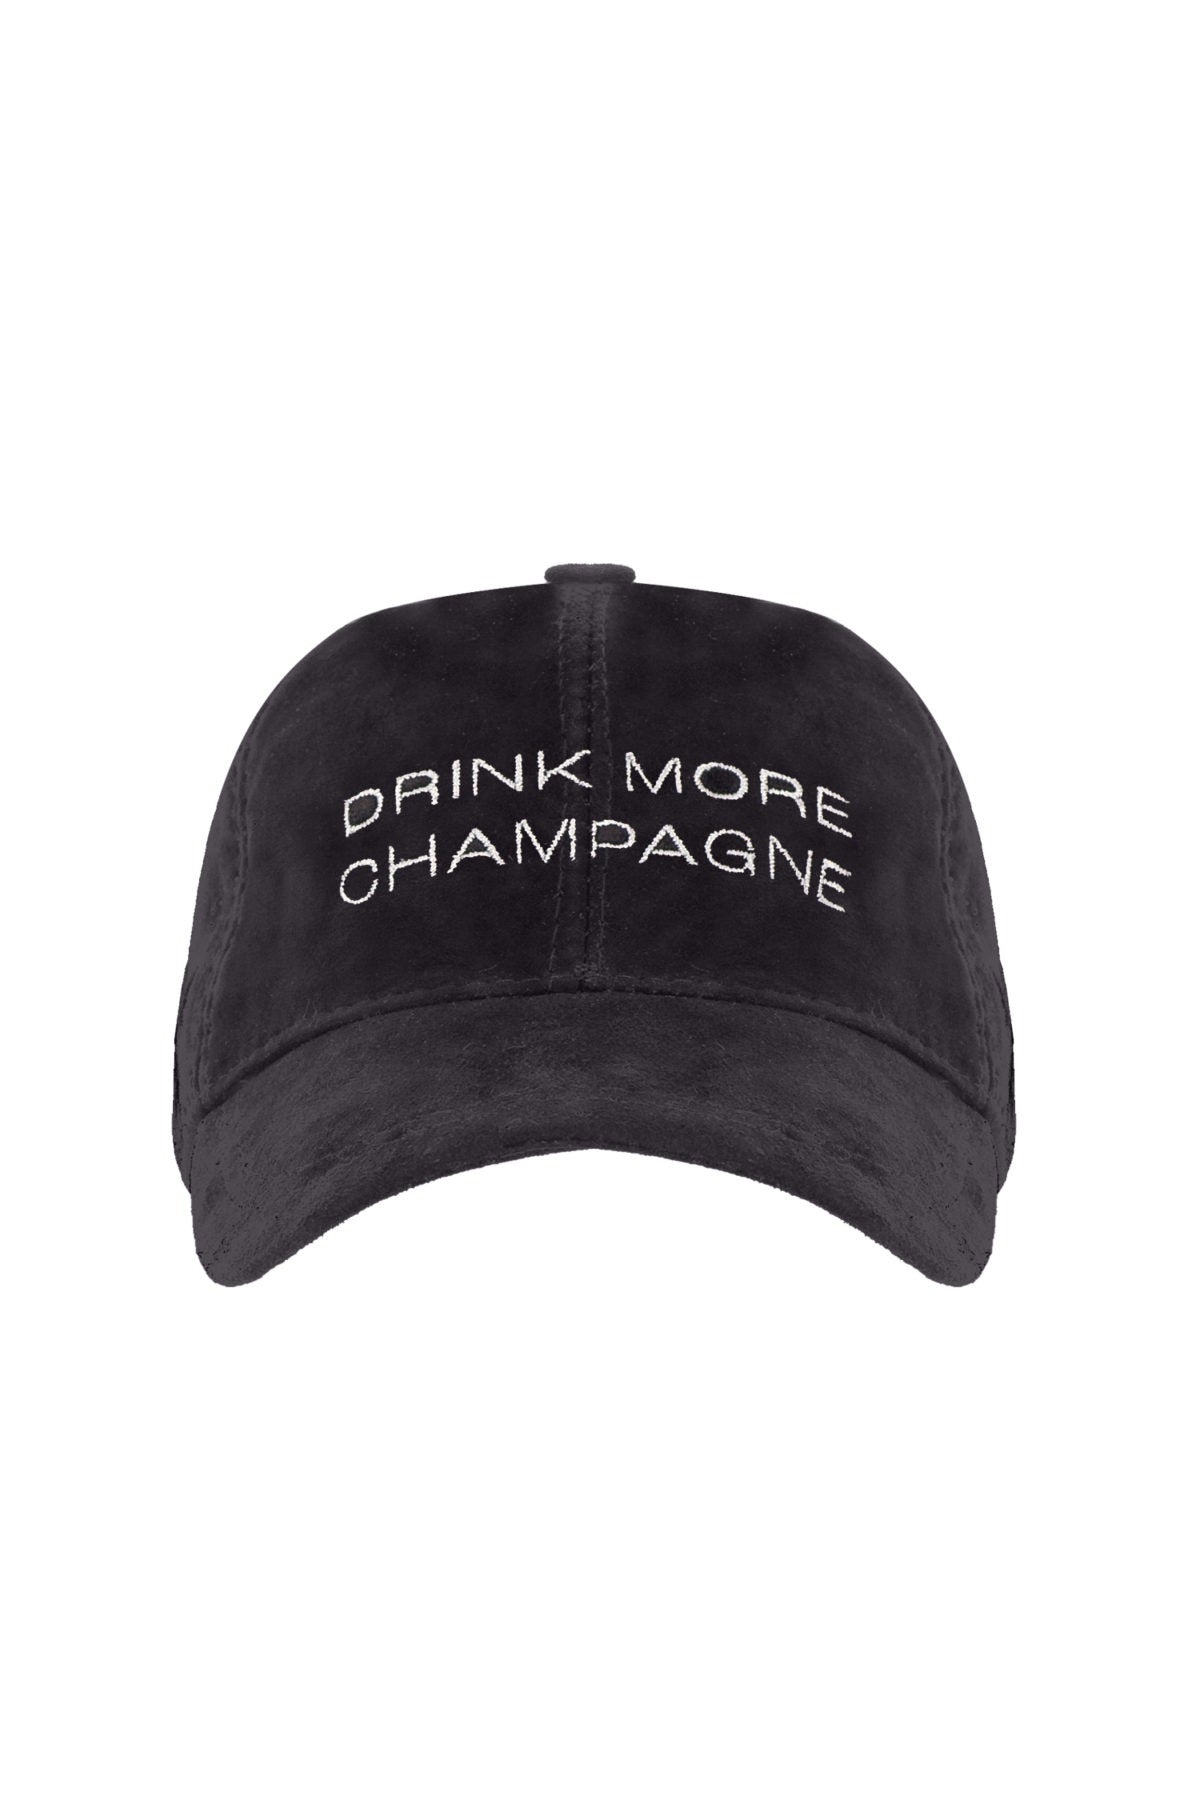 Drink More Champagne - Koyu Gri